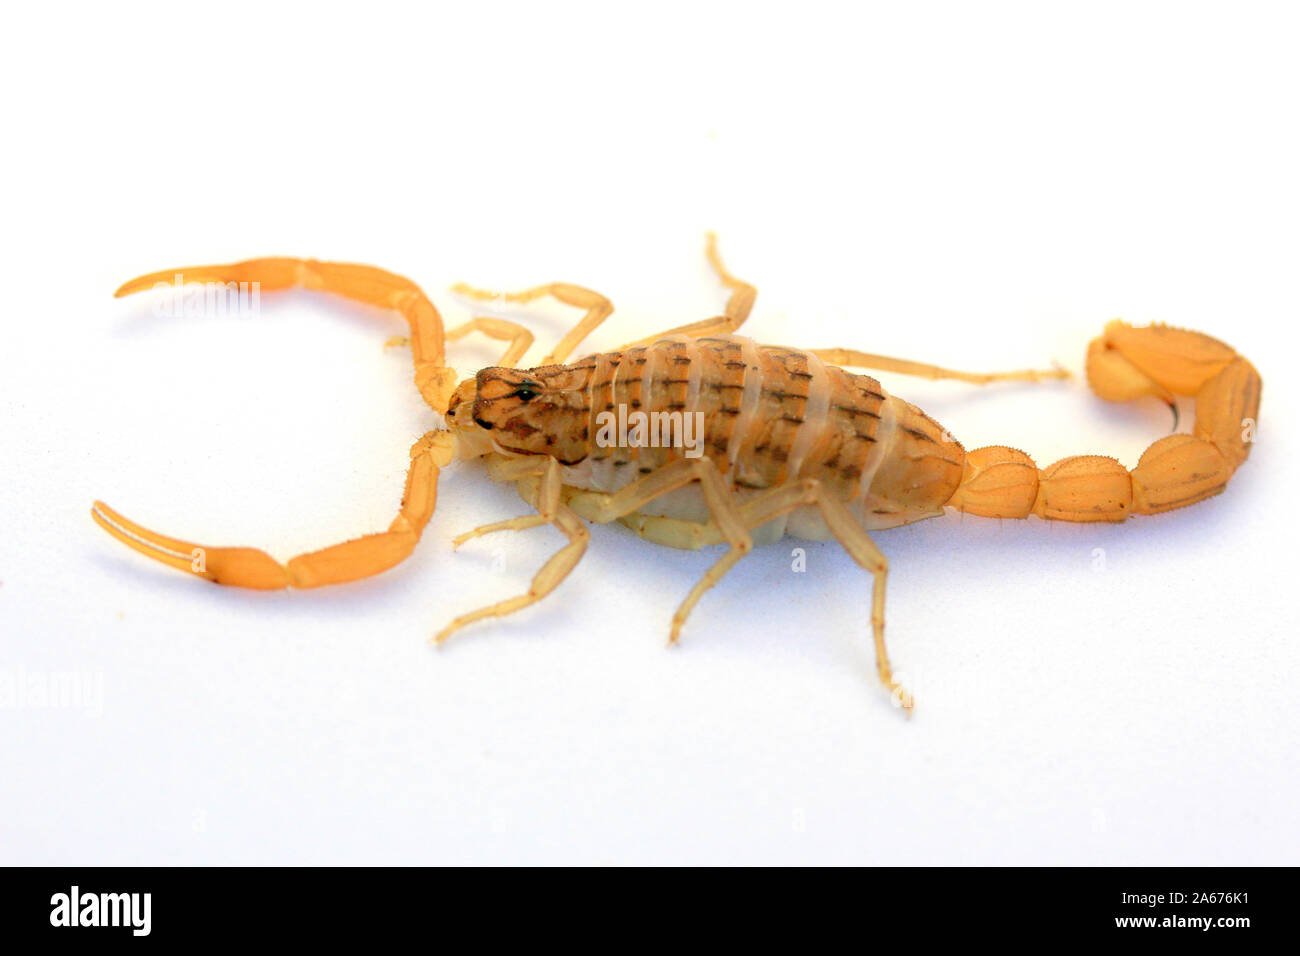 Scorpione mediterraneo, Mesobuthus gibbosus Foto Stock